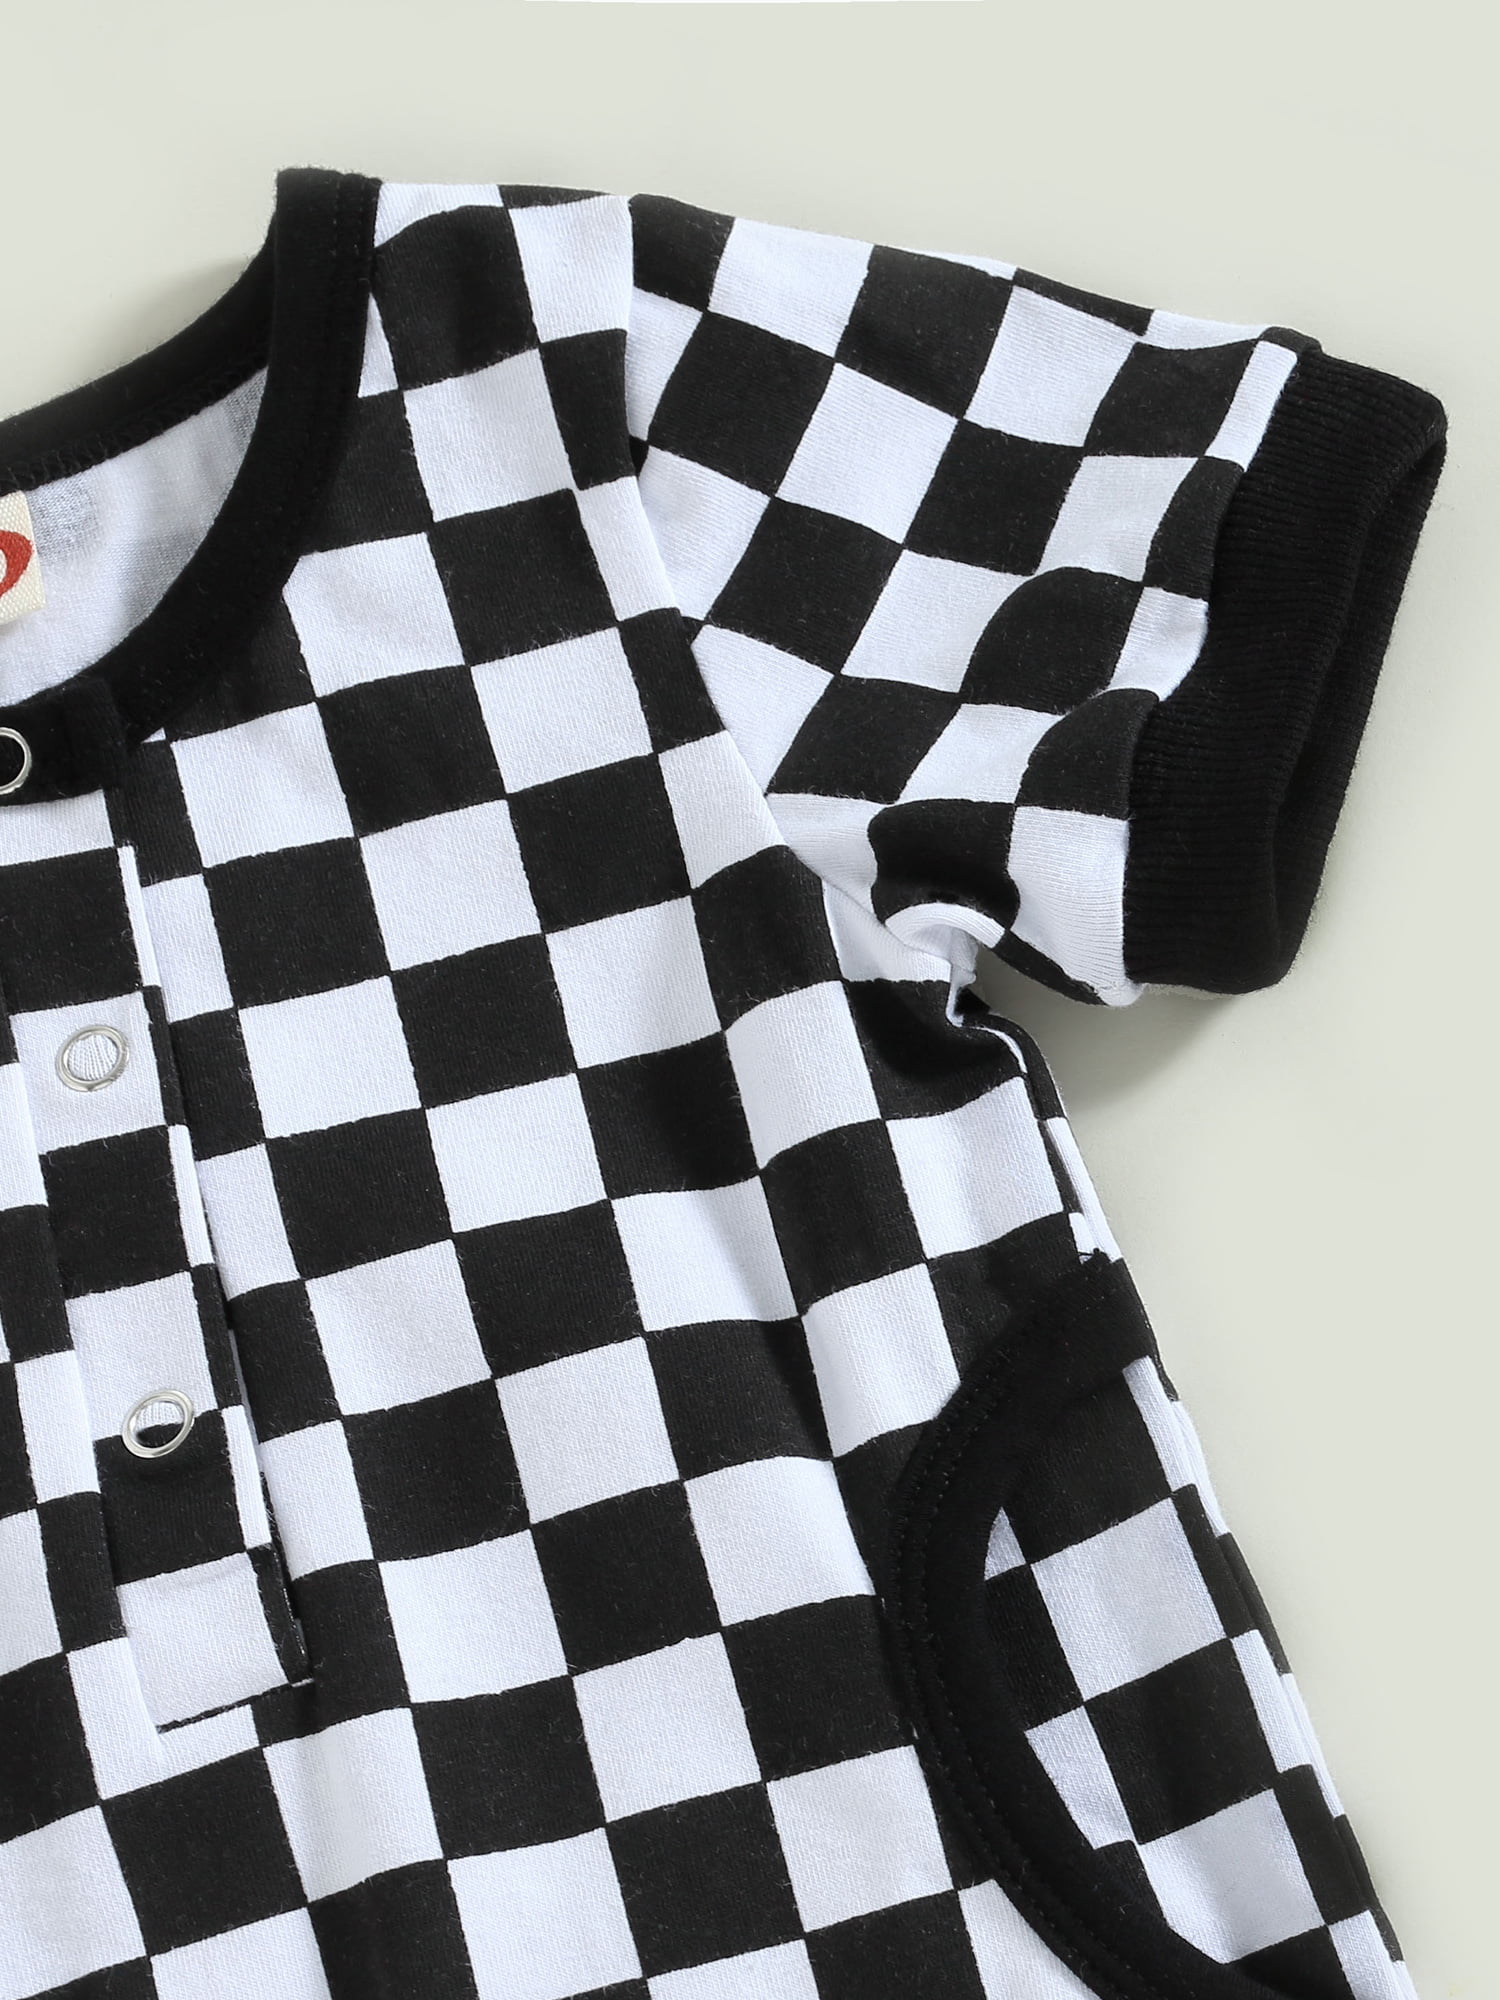 Licupiee Newborn Infant Boy Checkerboard Plaid Print Short Sleeve